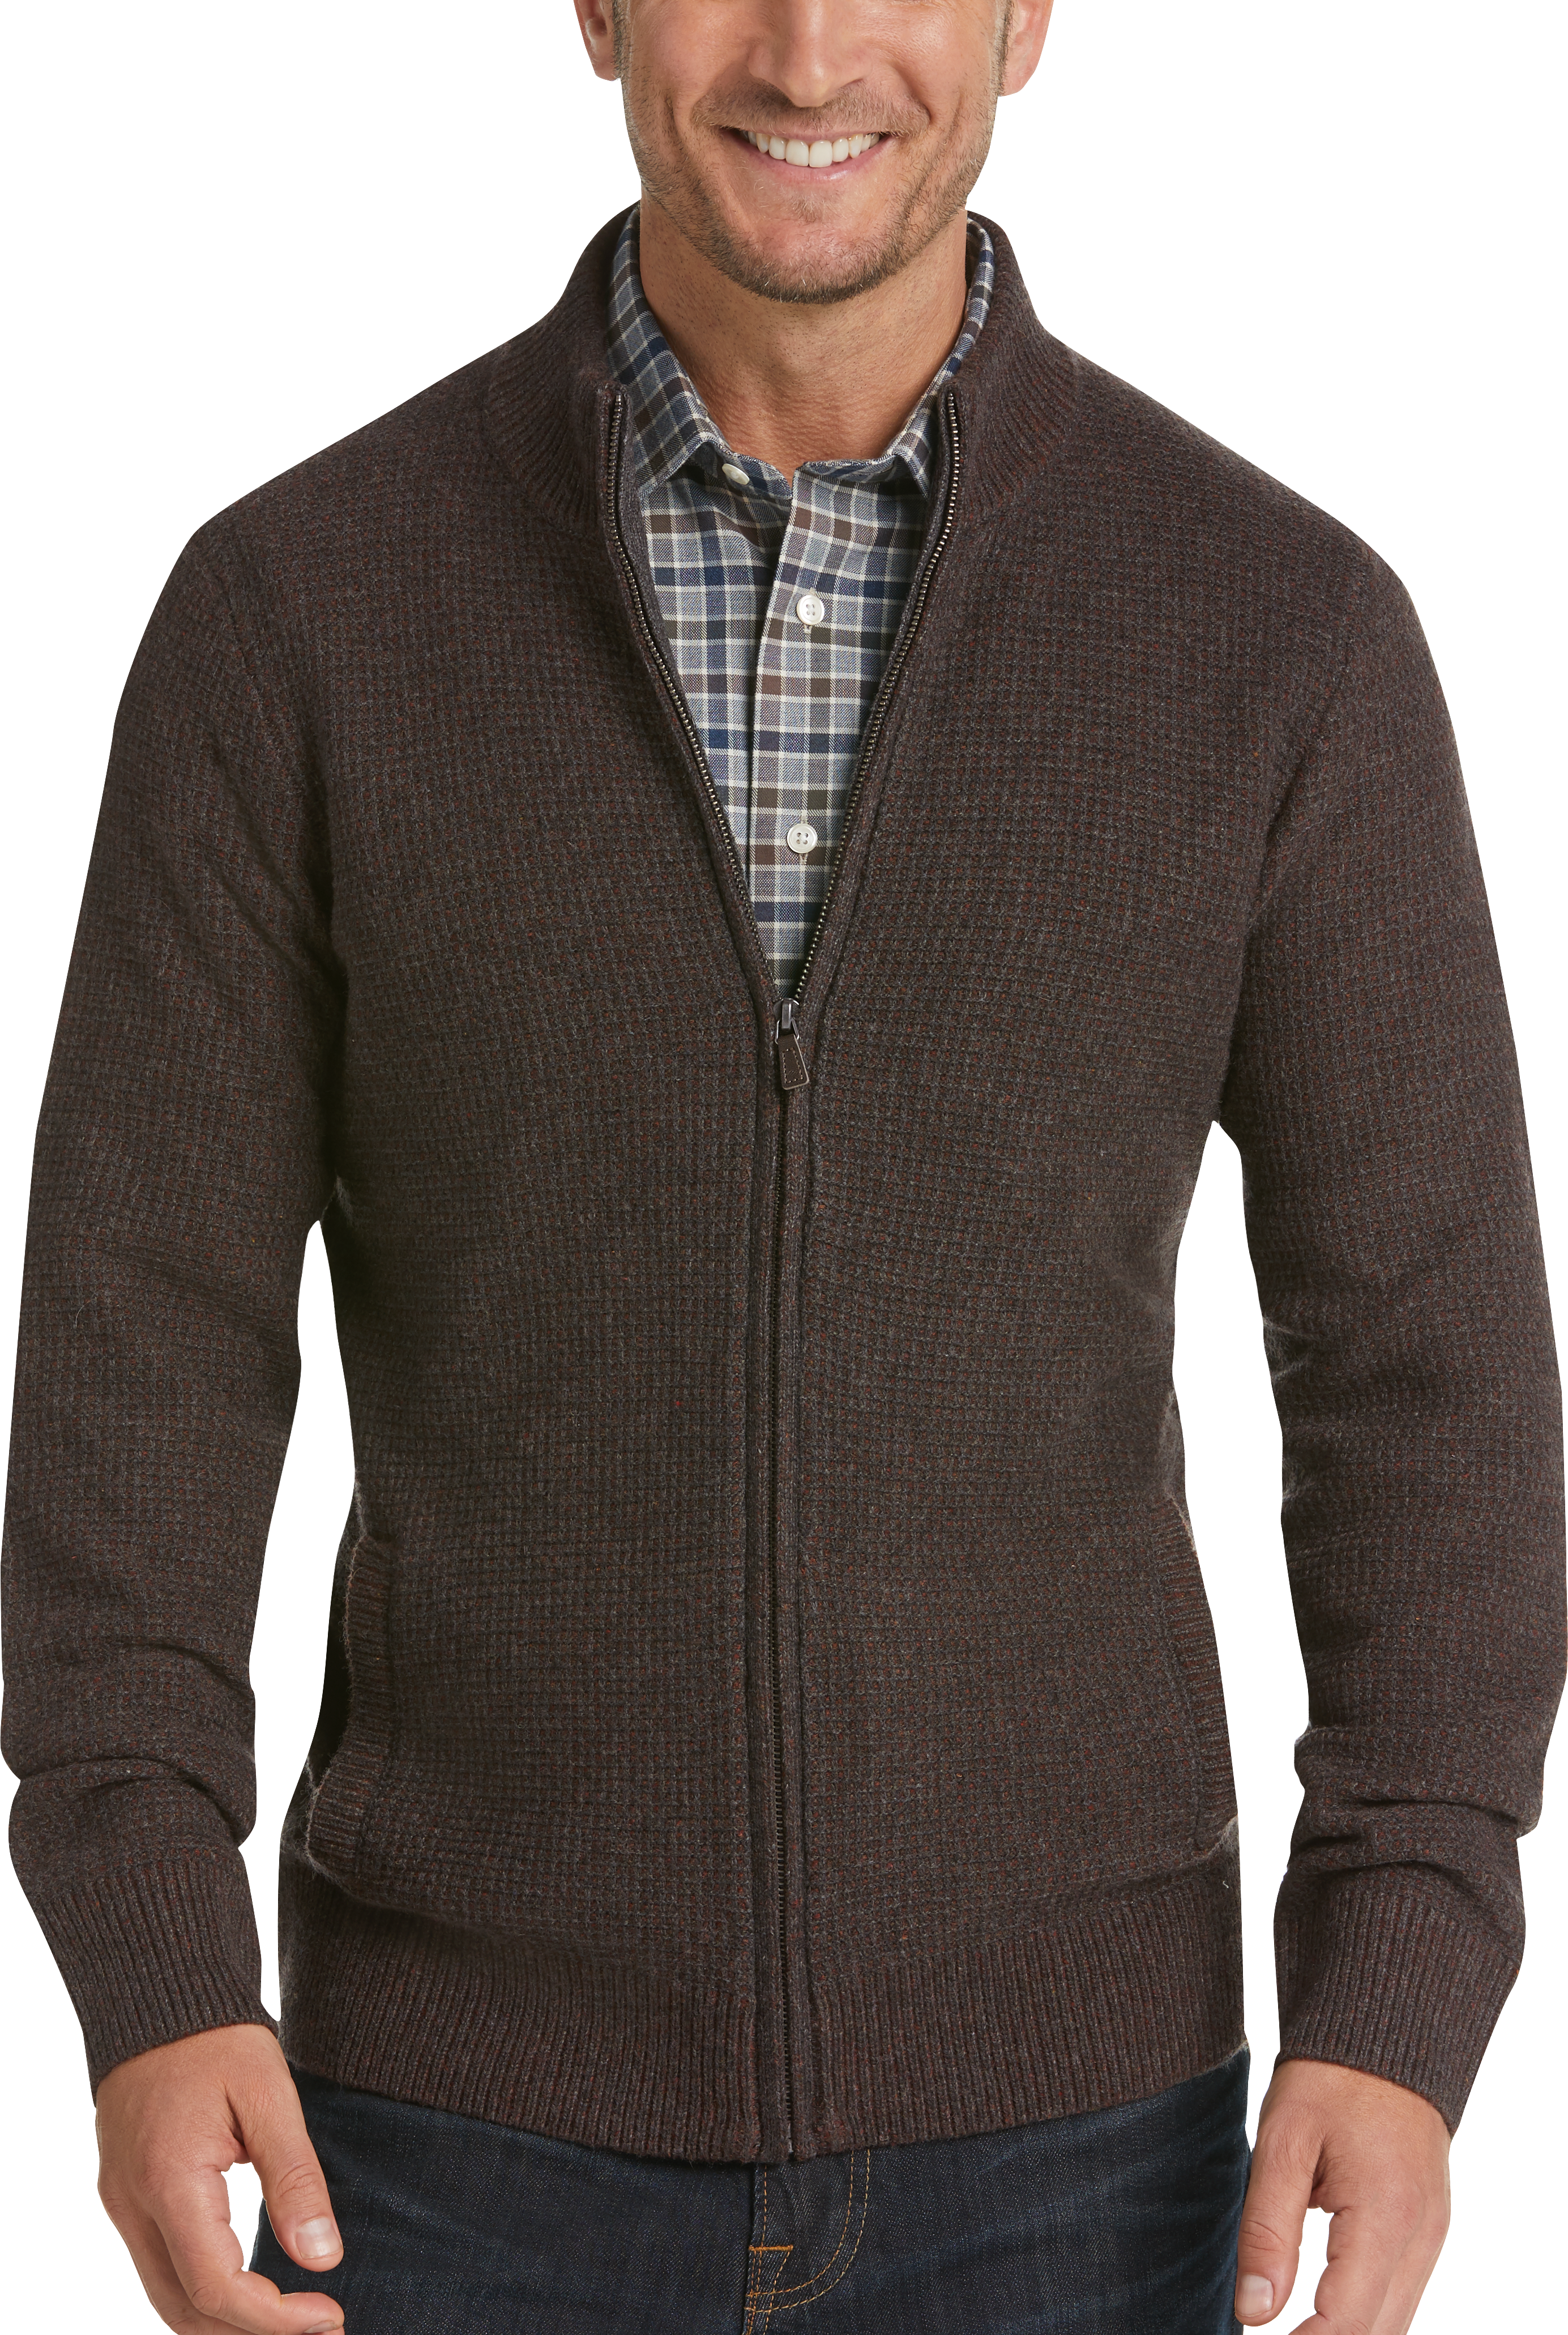 Joseph Abboud Burgundy & Gray Full Zip Cardigan Sweater - Men's Sale ...